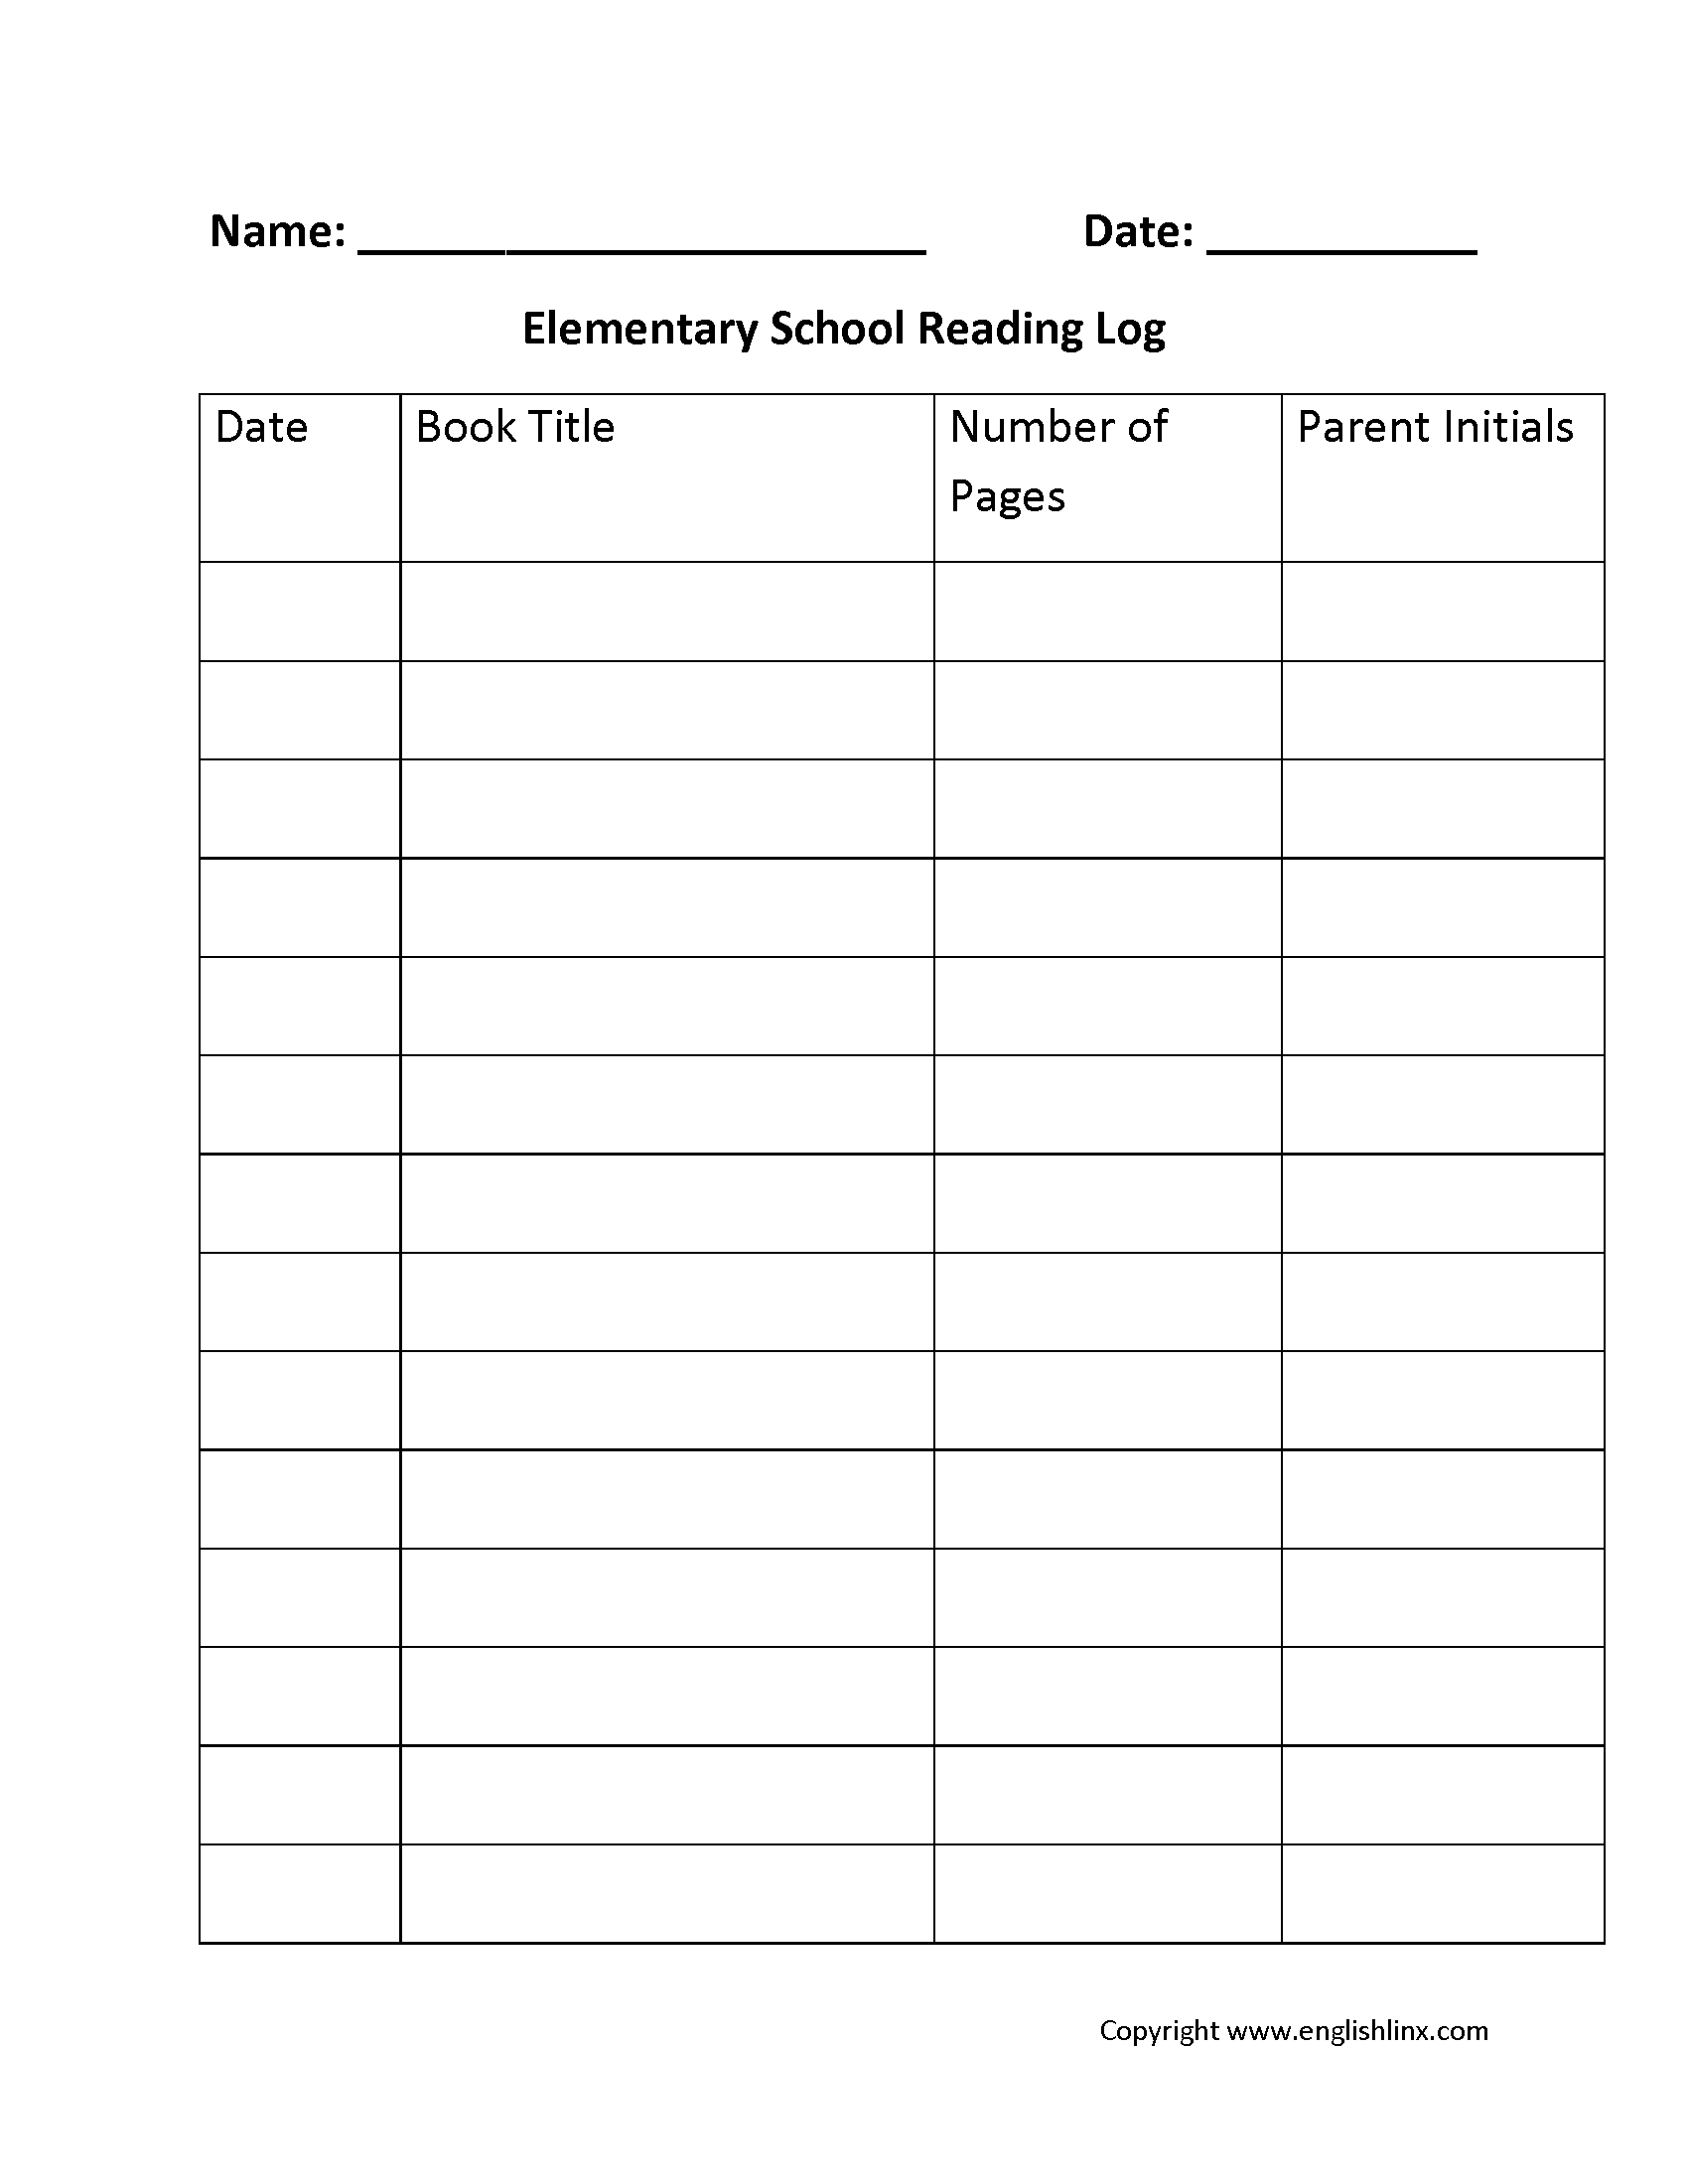 Elementary School Reading Logs Worksheet